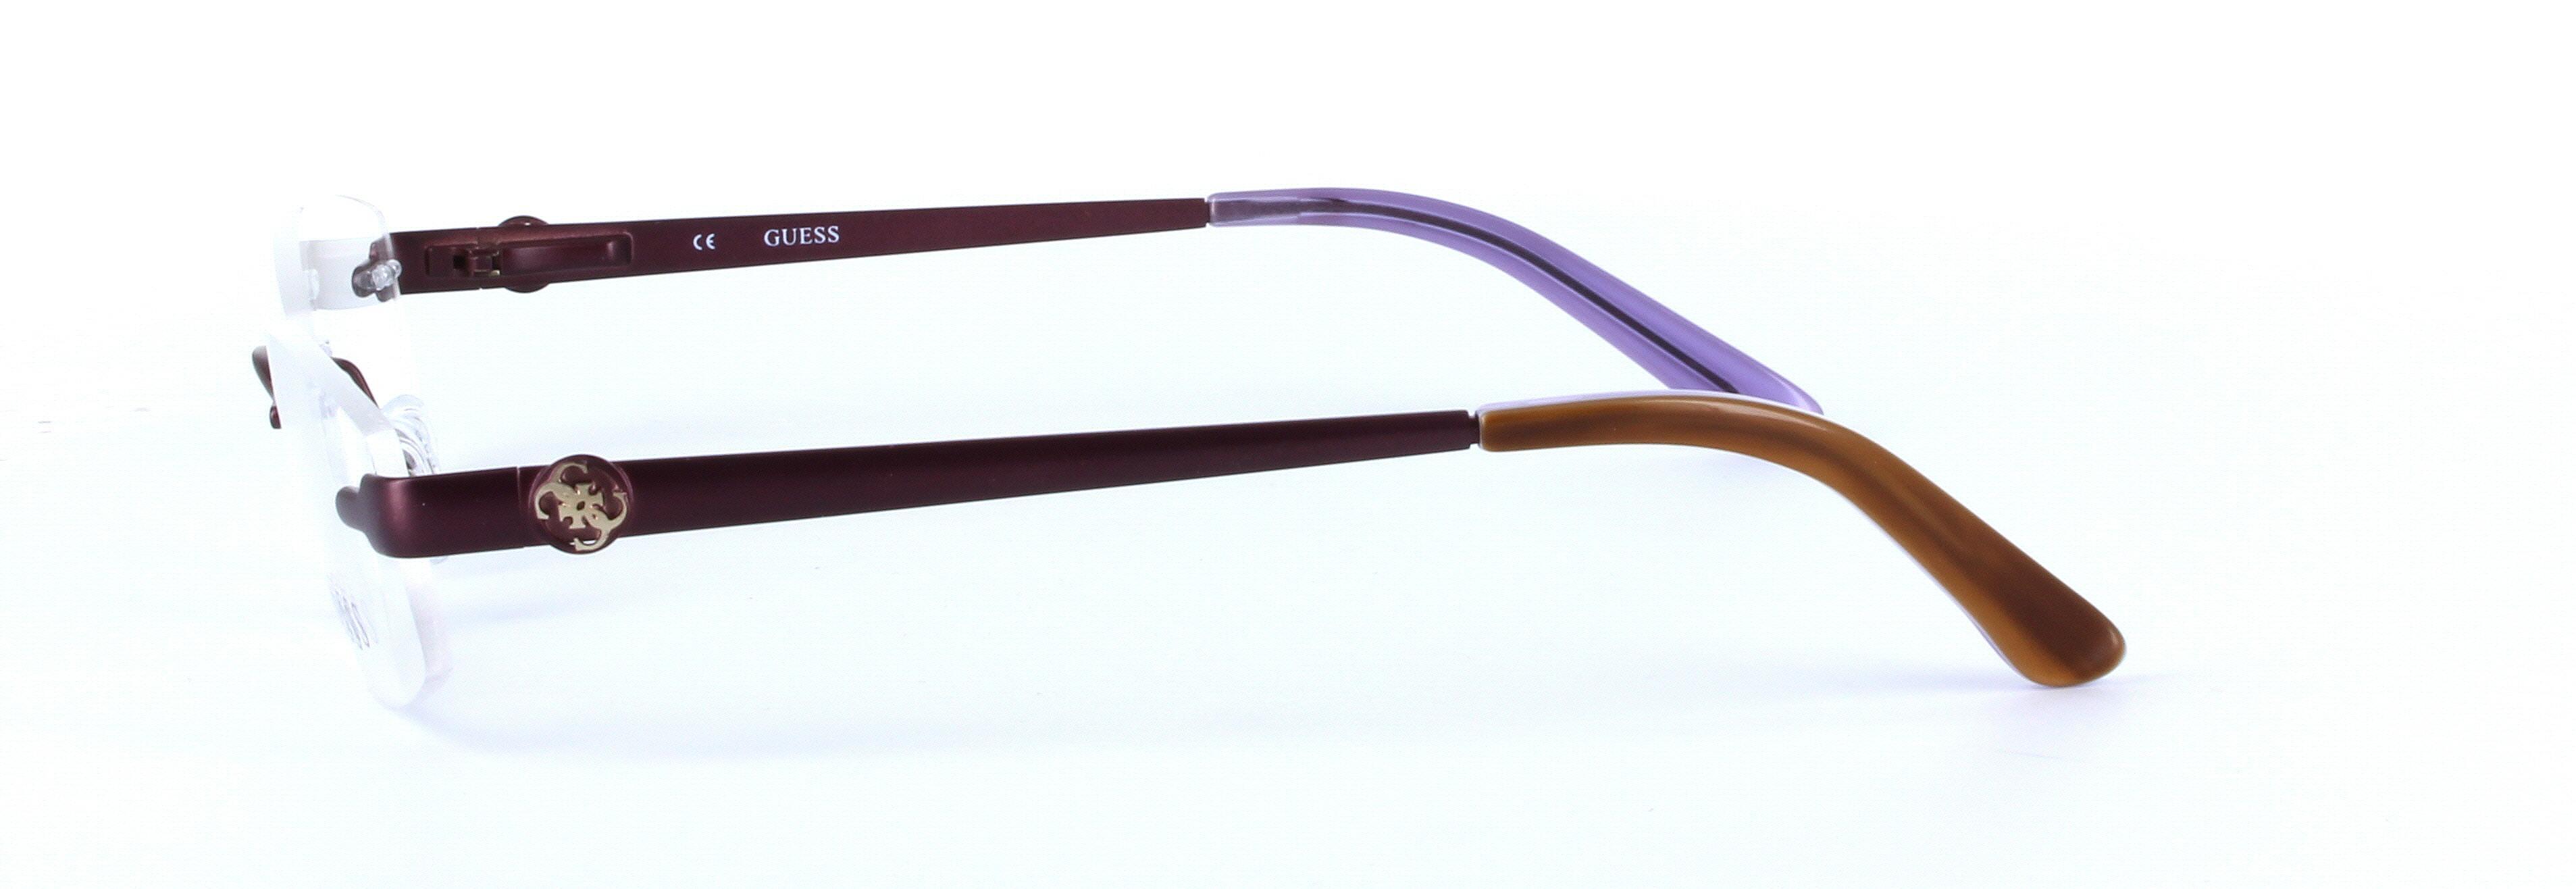 GUESS (GU2337-PUR) Purple Rimless Oval Rectangular Metal Glasses - Image View 2